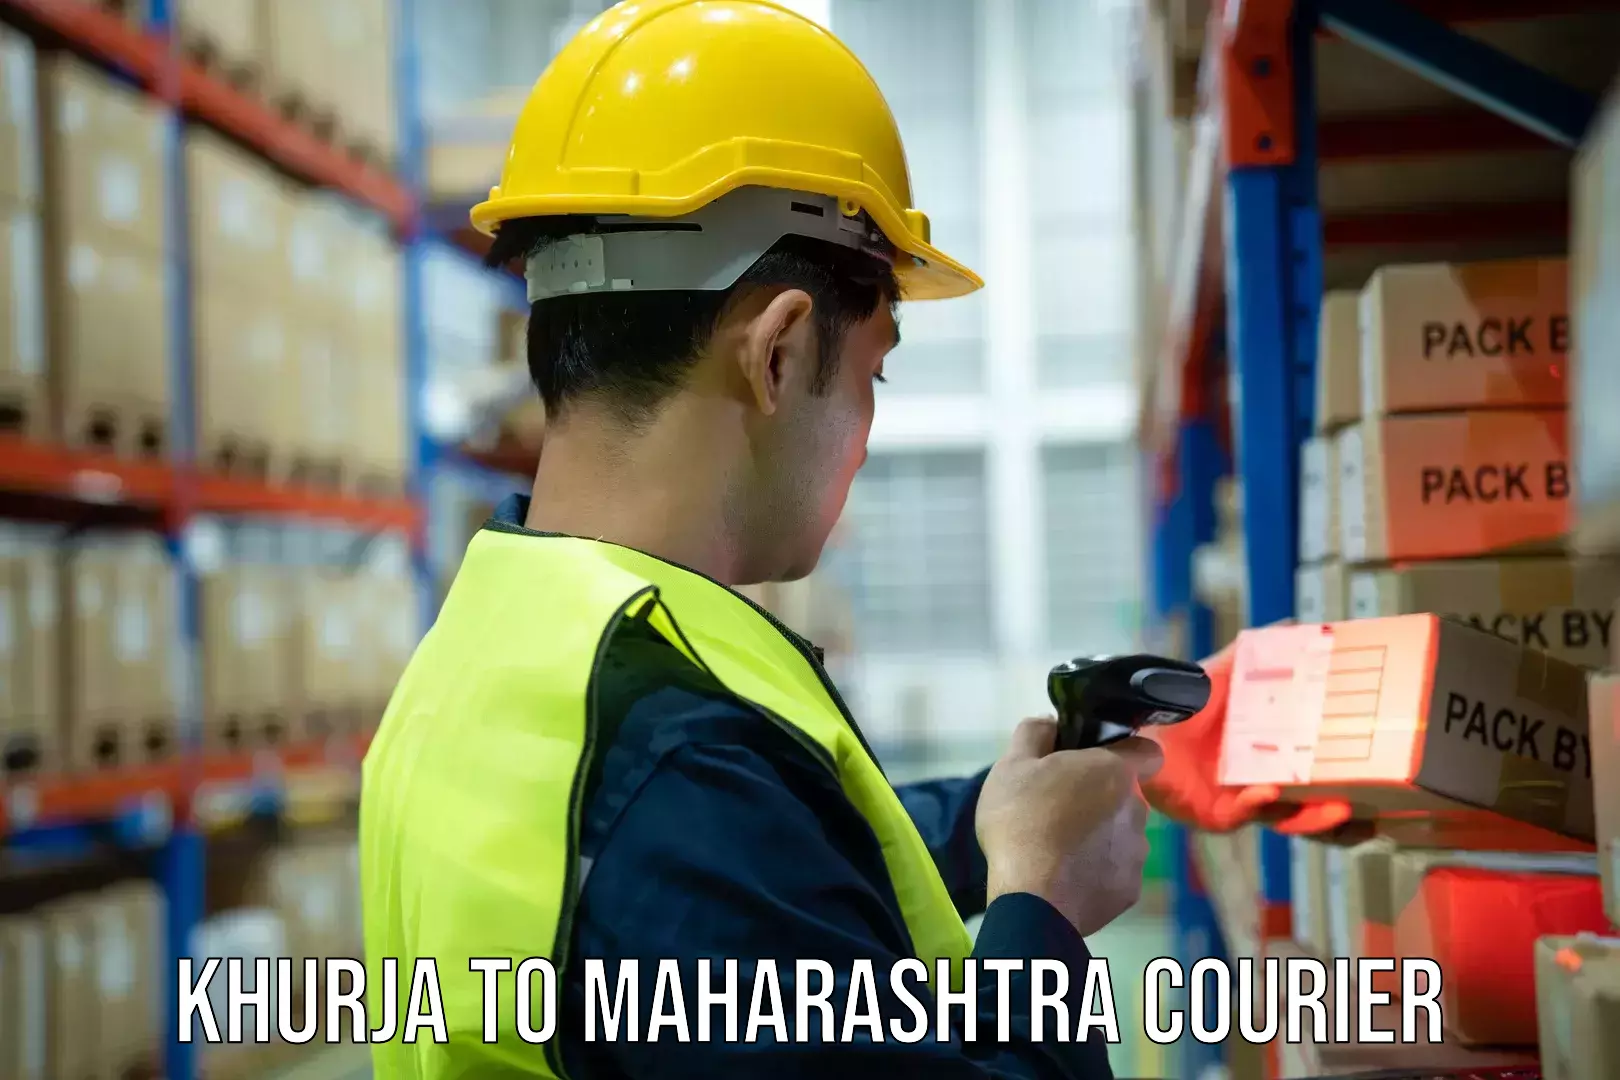 High-priority parcel service Khurja to Maharashtra